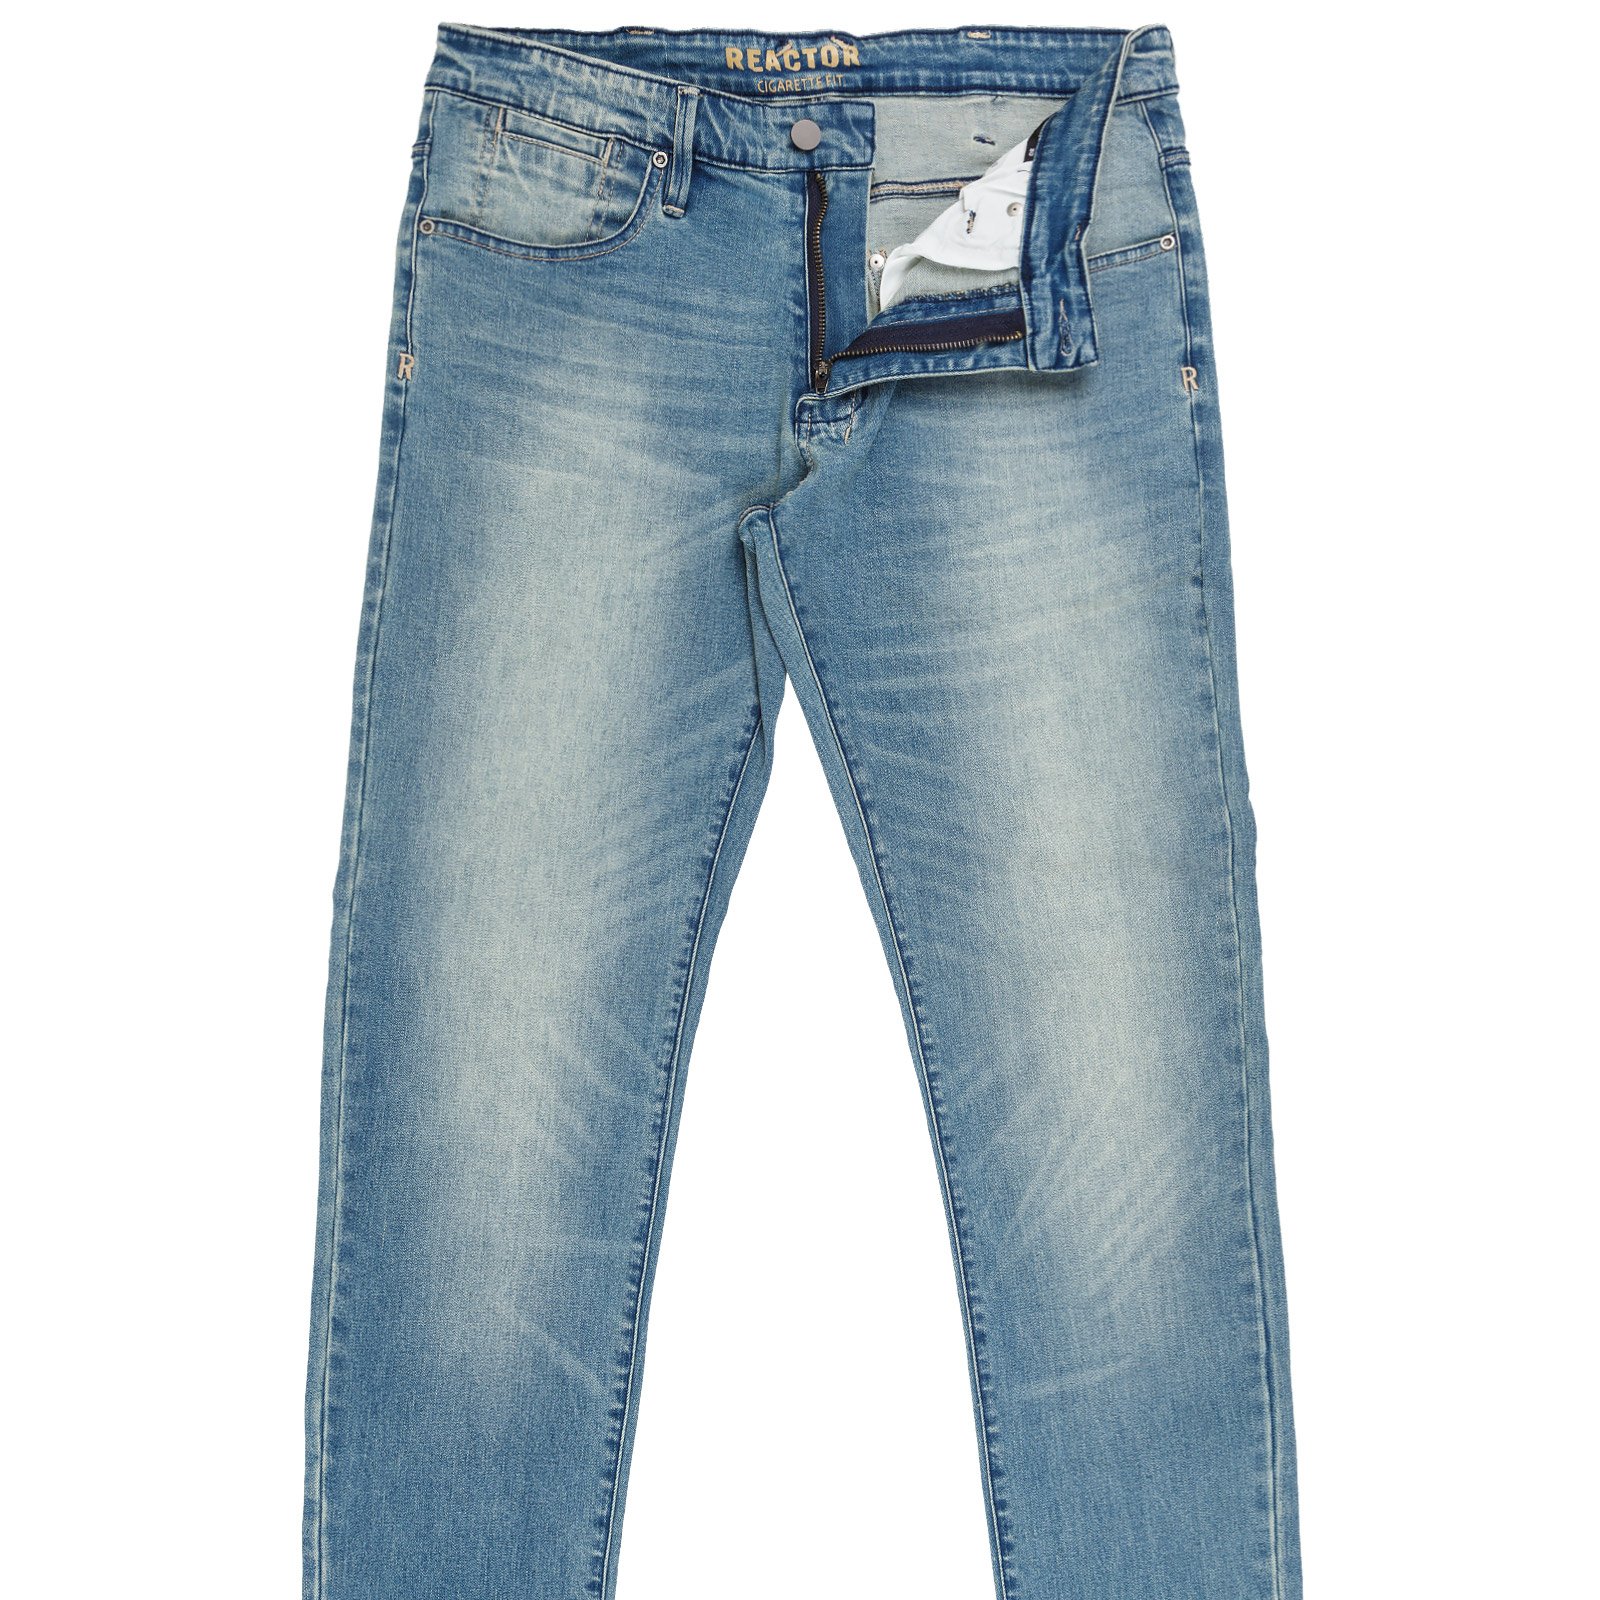 Reflect Stretch Denim Jeans - On Sale : Fifth Avenue Menswear - REACTOR ...